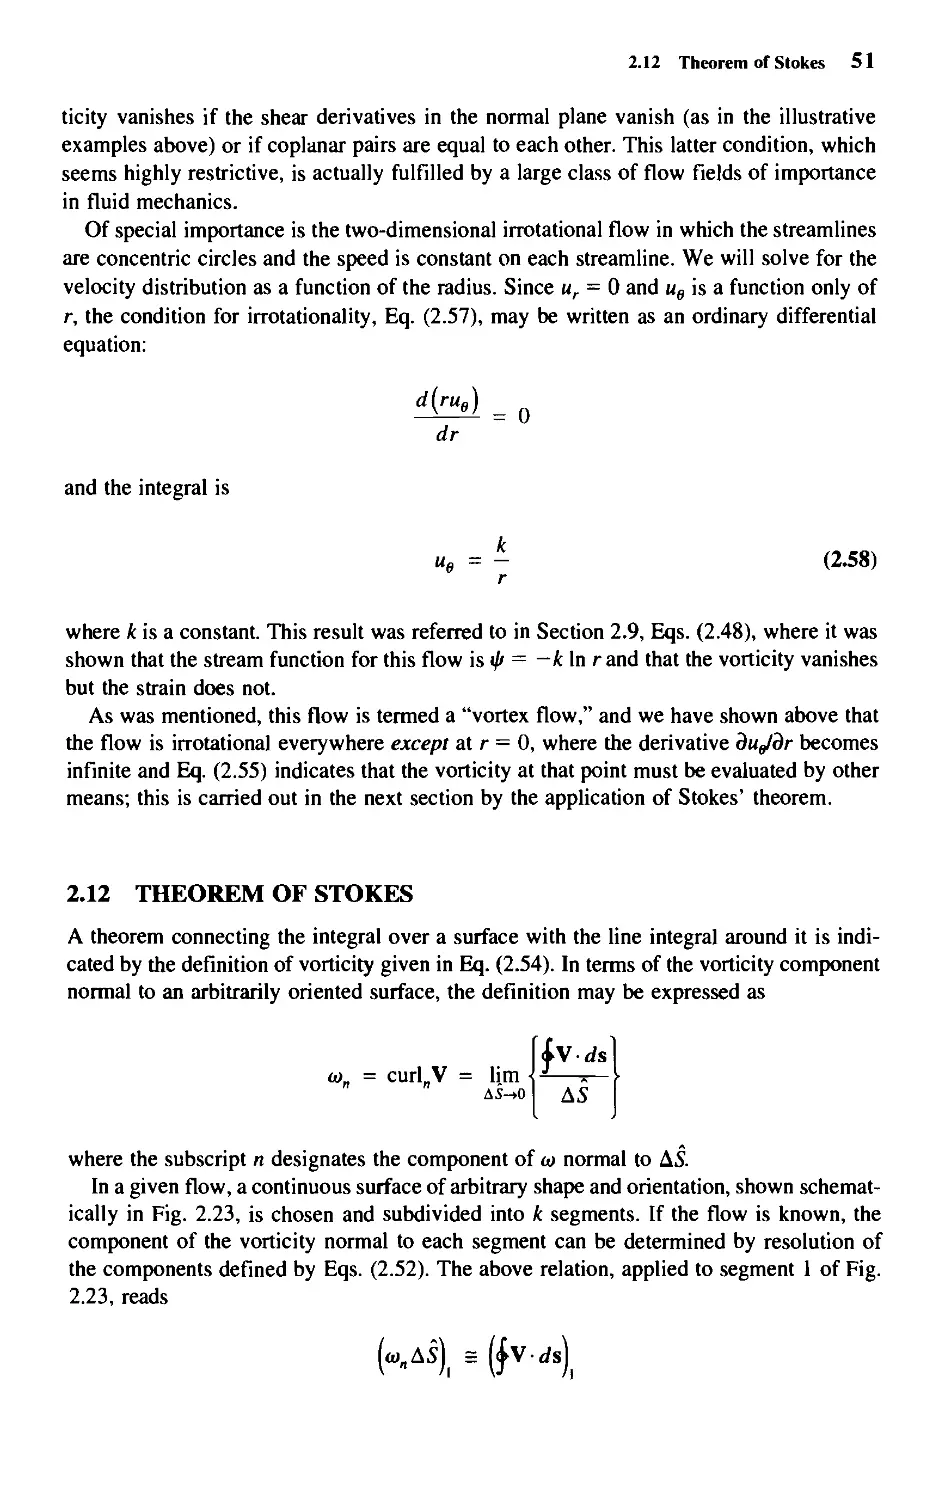 2.12 - Theorem of Stokes